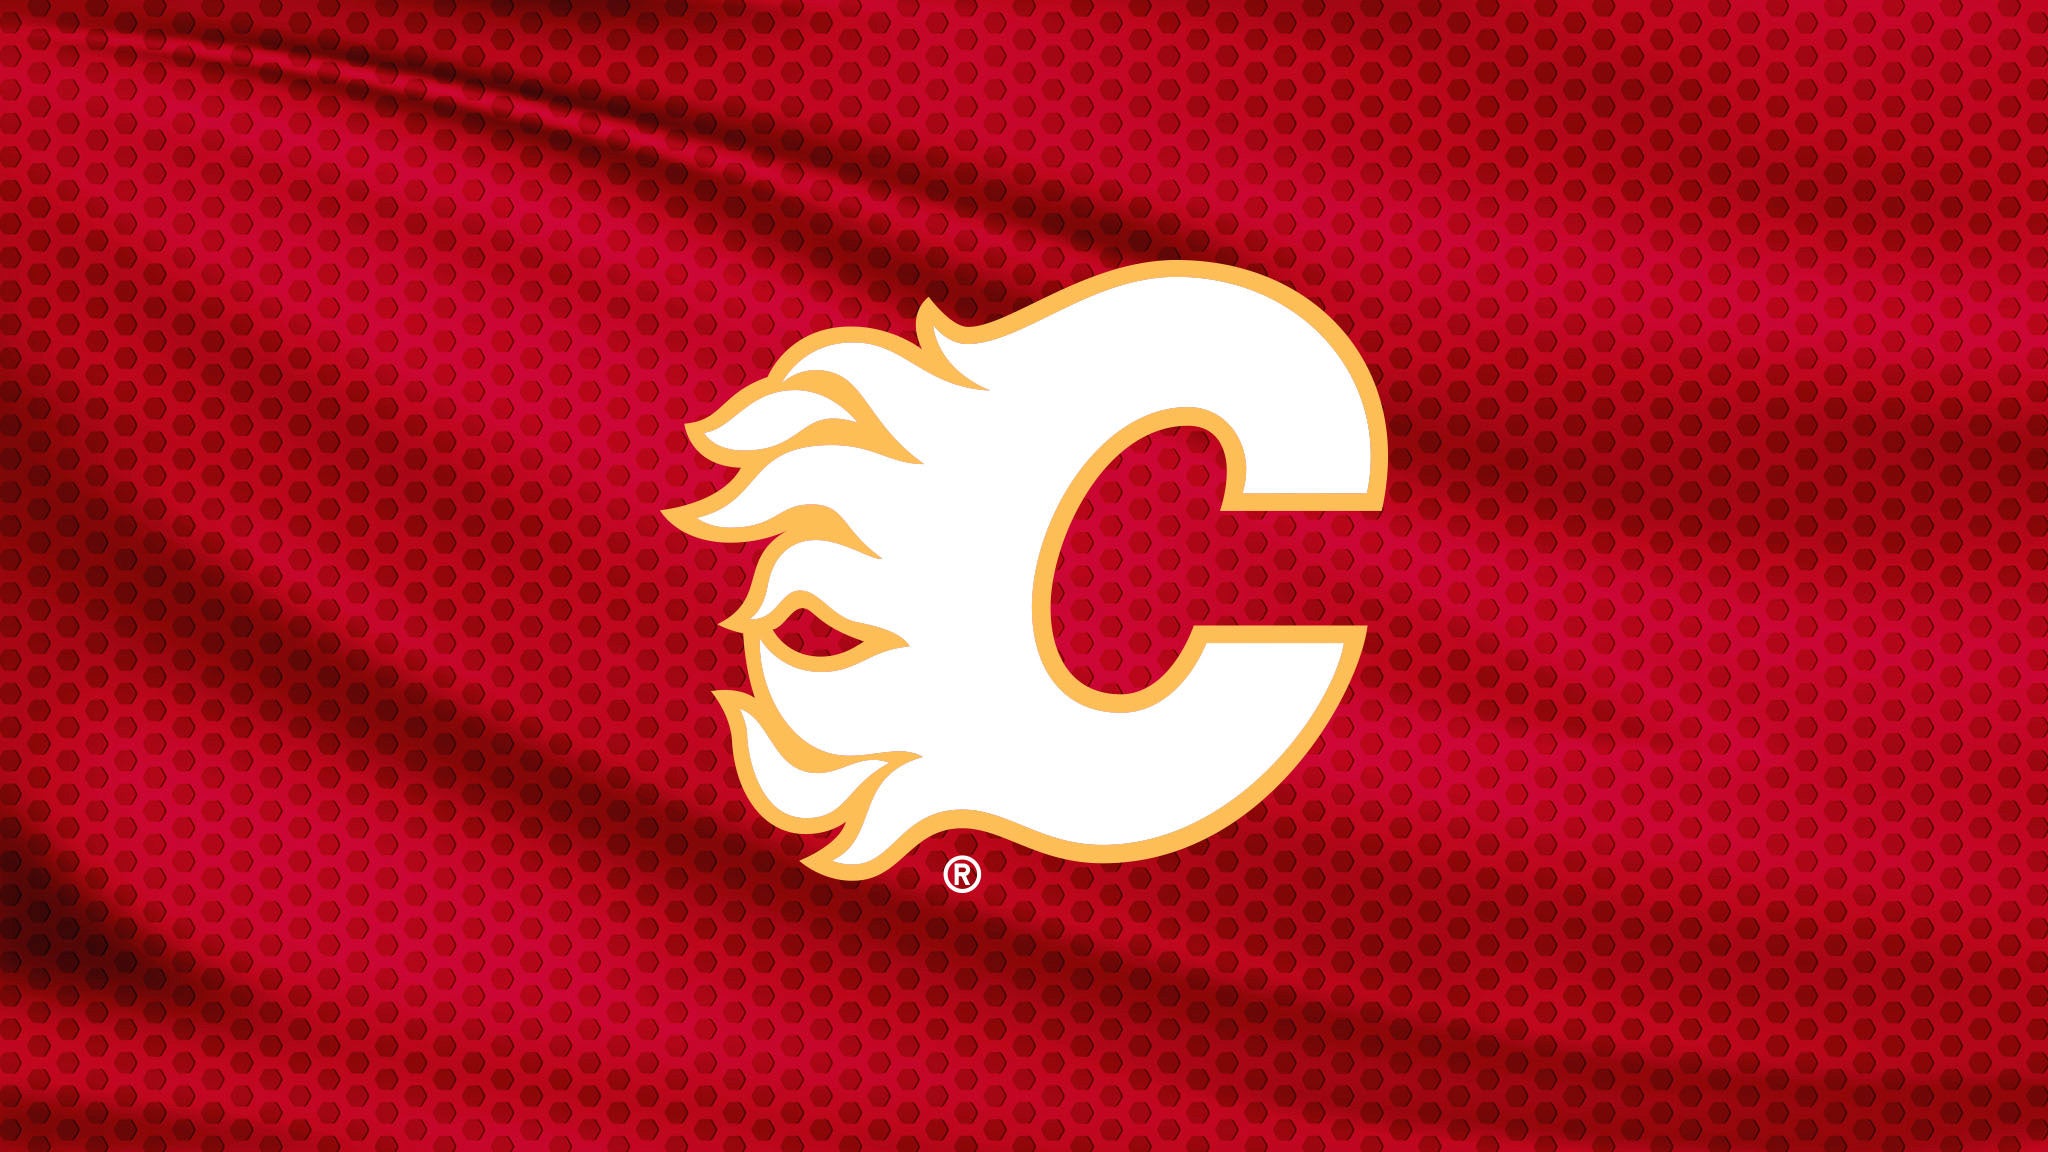 Calgary Flames vs. Buffalo Sabres in Calgary promo photo for Ticketmaster presale offer code